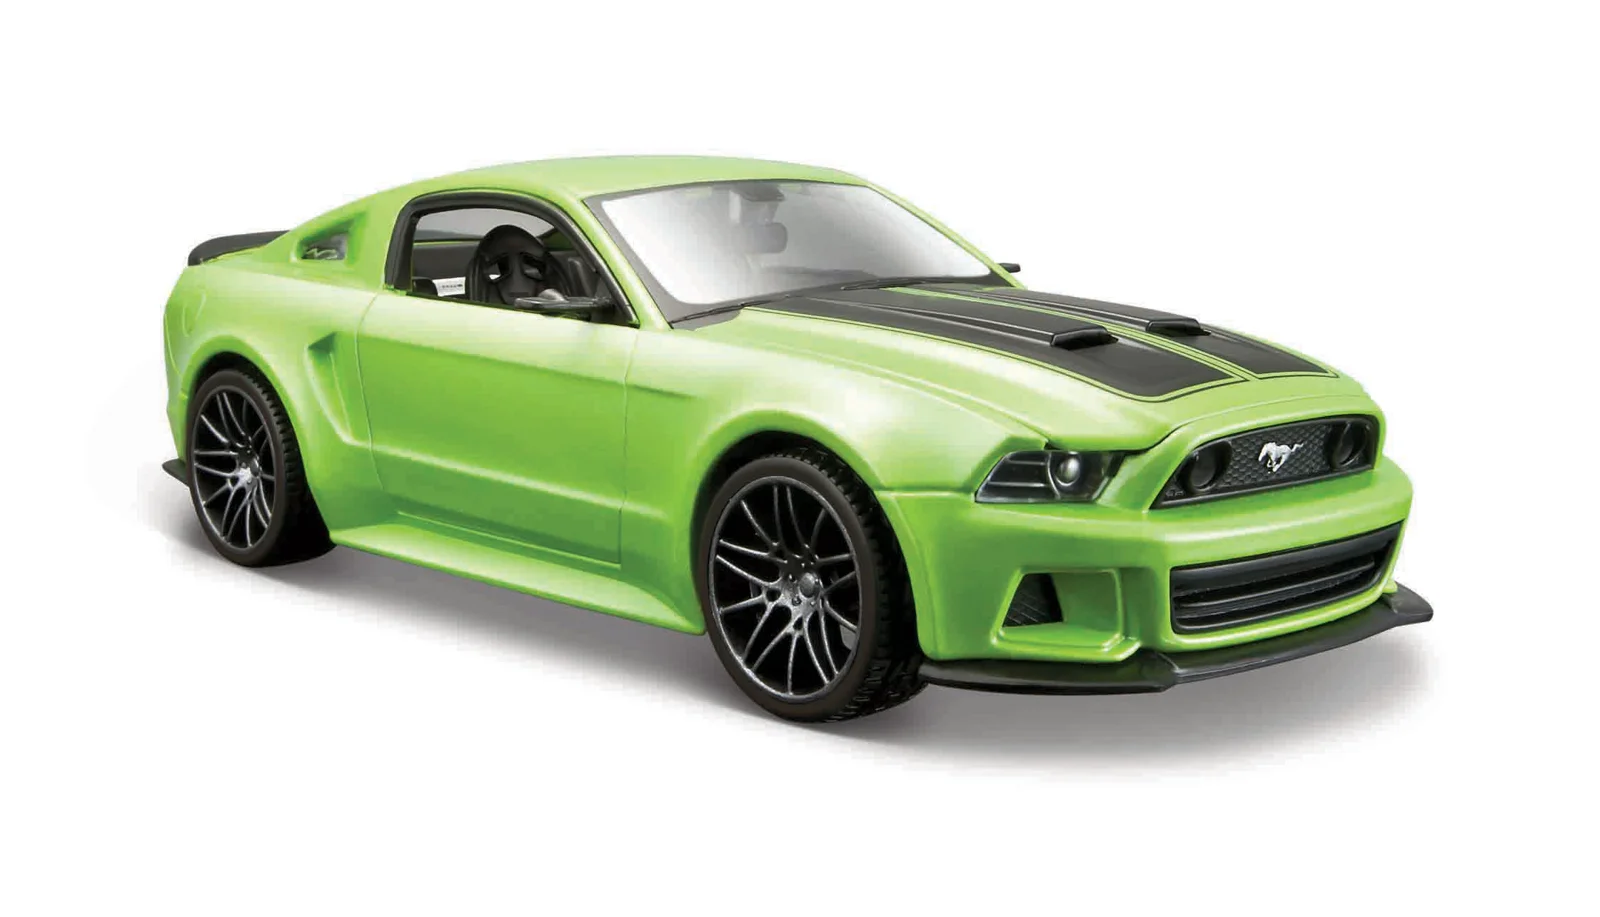 Maisto - 2014 Ford Mustang Street Racer, matná zelená, 1:24